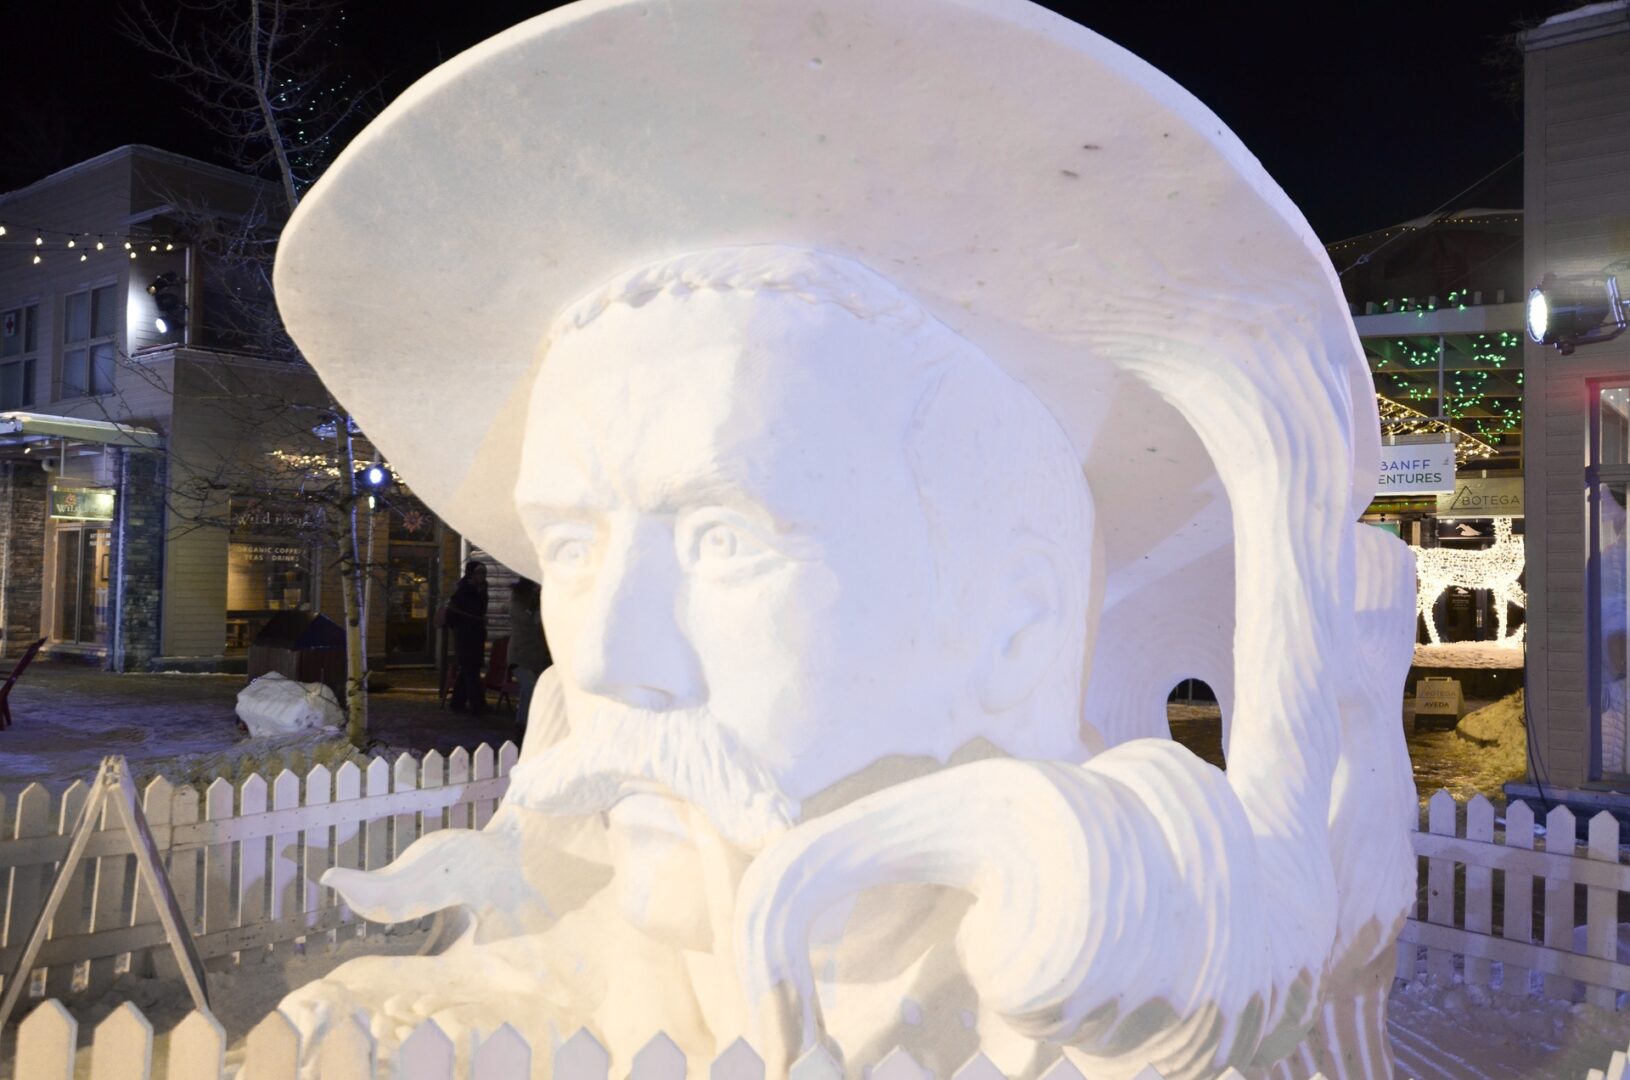 Snow sculpture of a man's head at Banff Snowdays Festival 